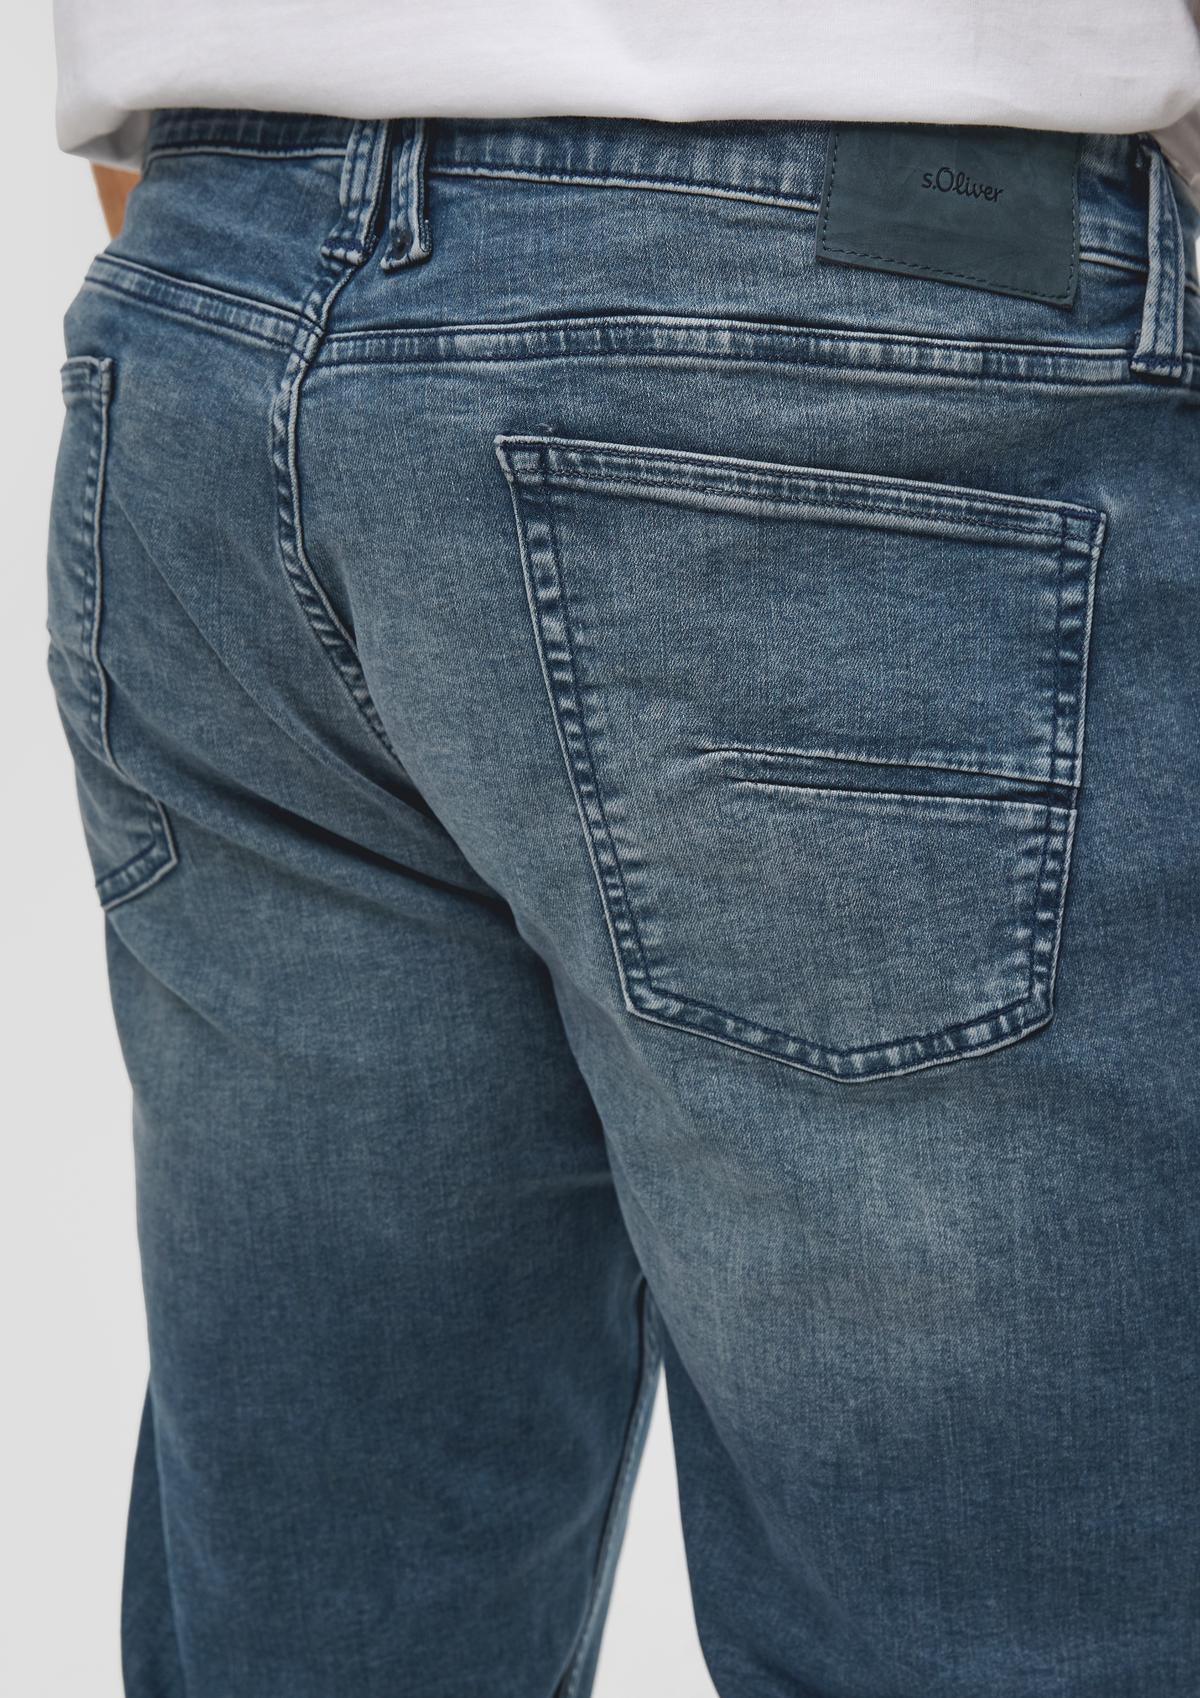 jeans leg - mid regular York / fit / / blue rise regular